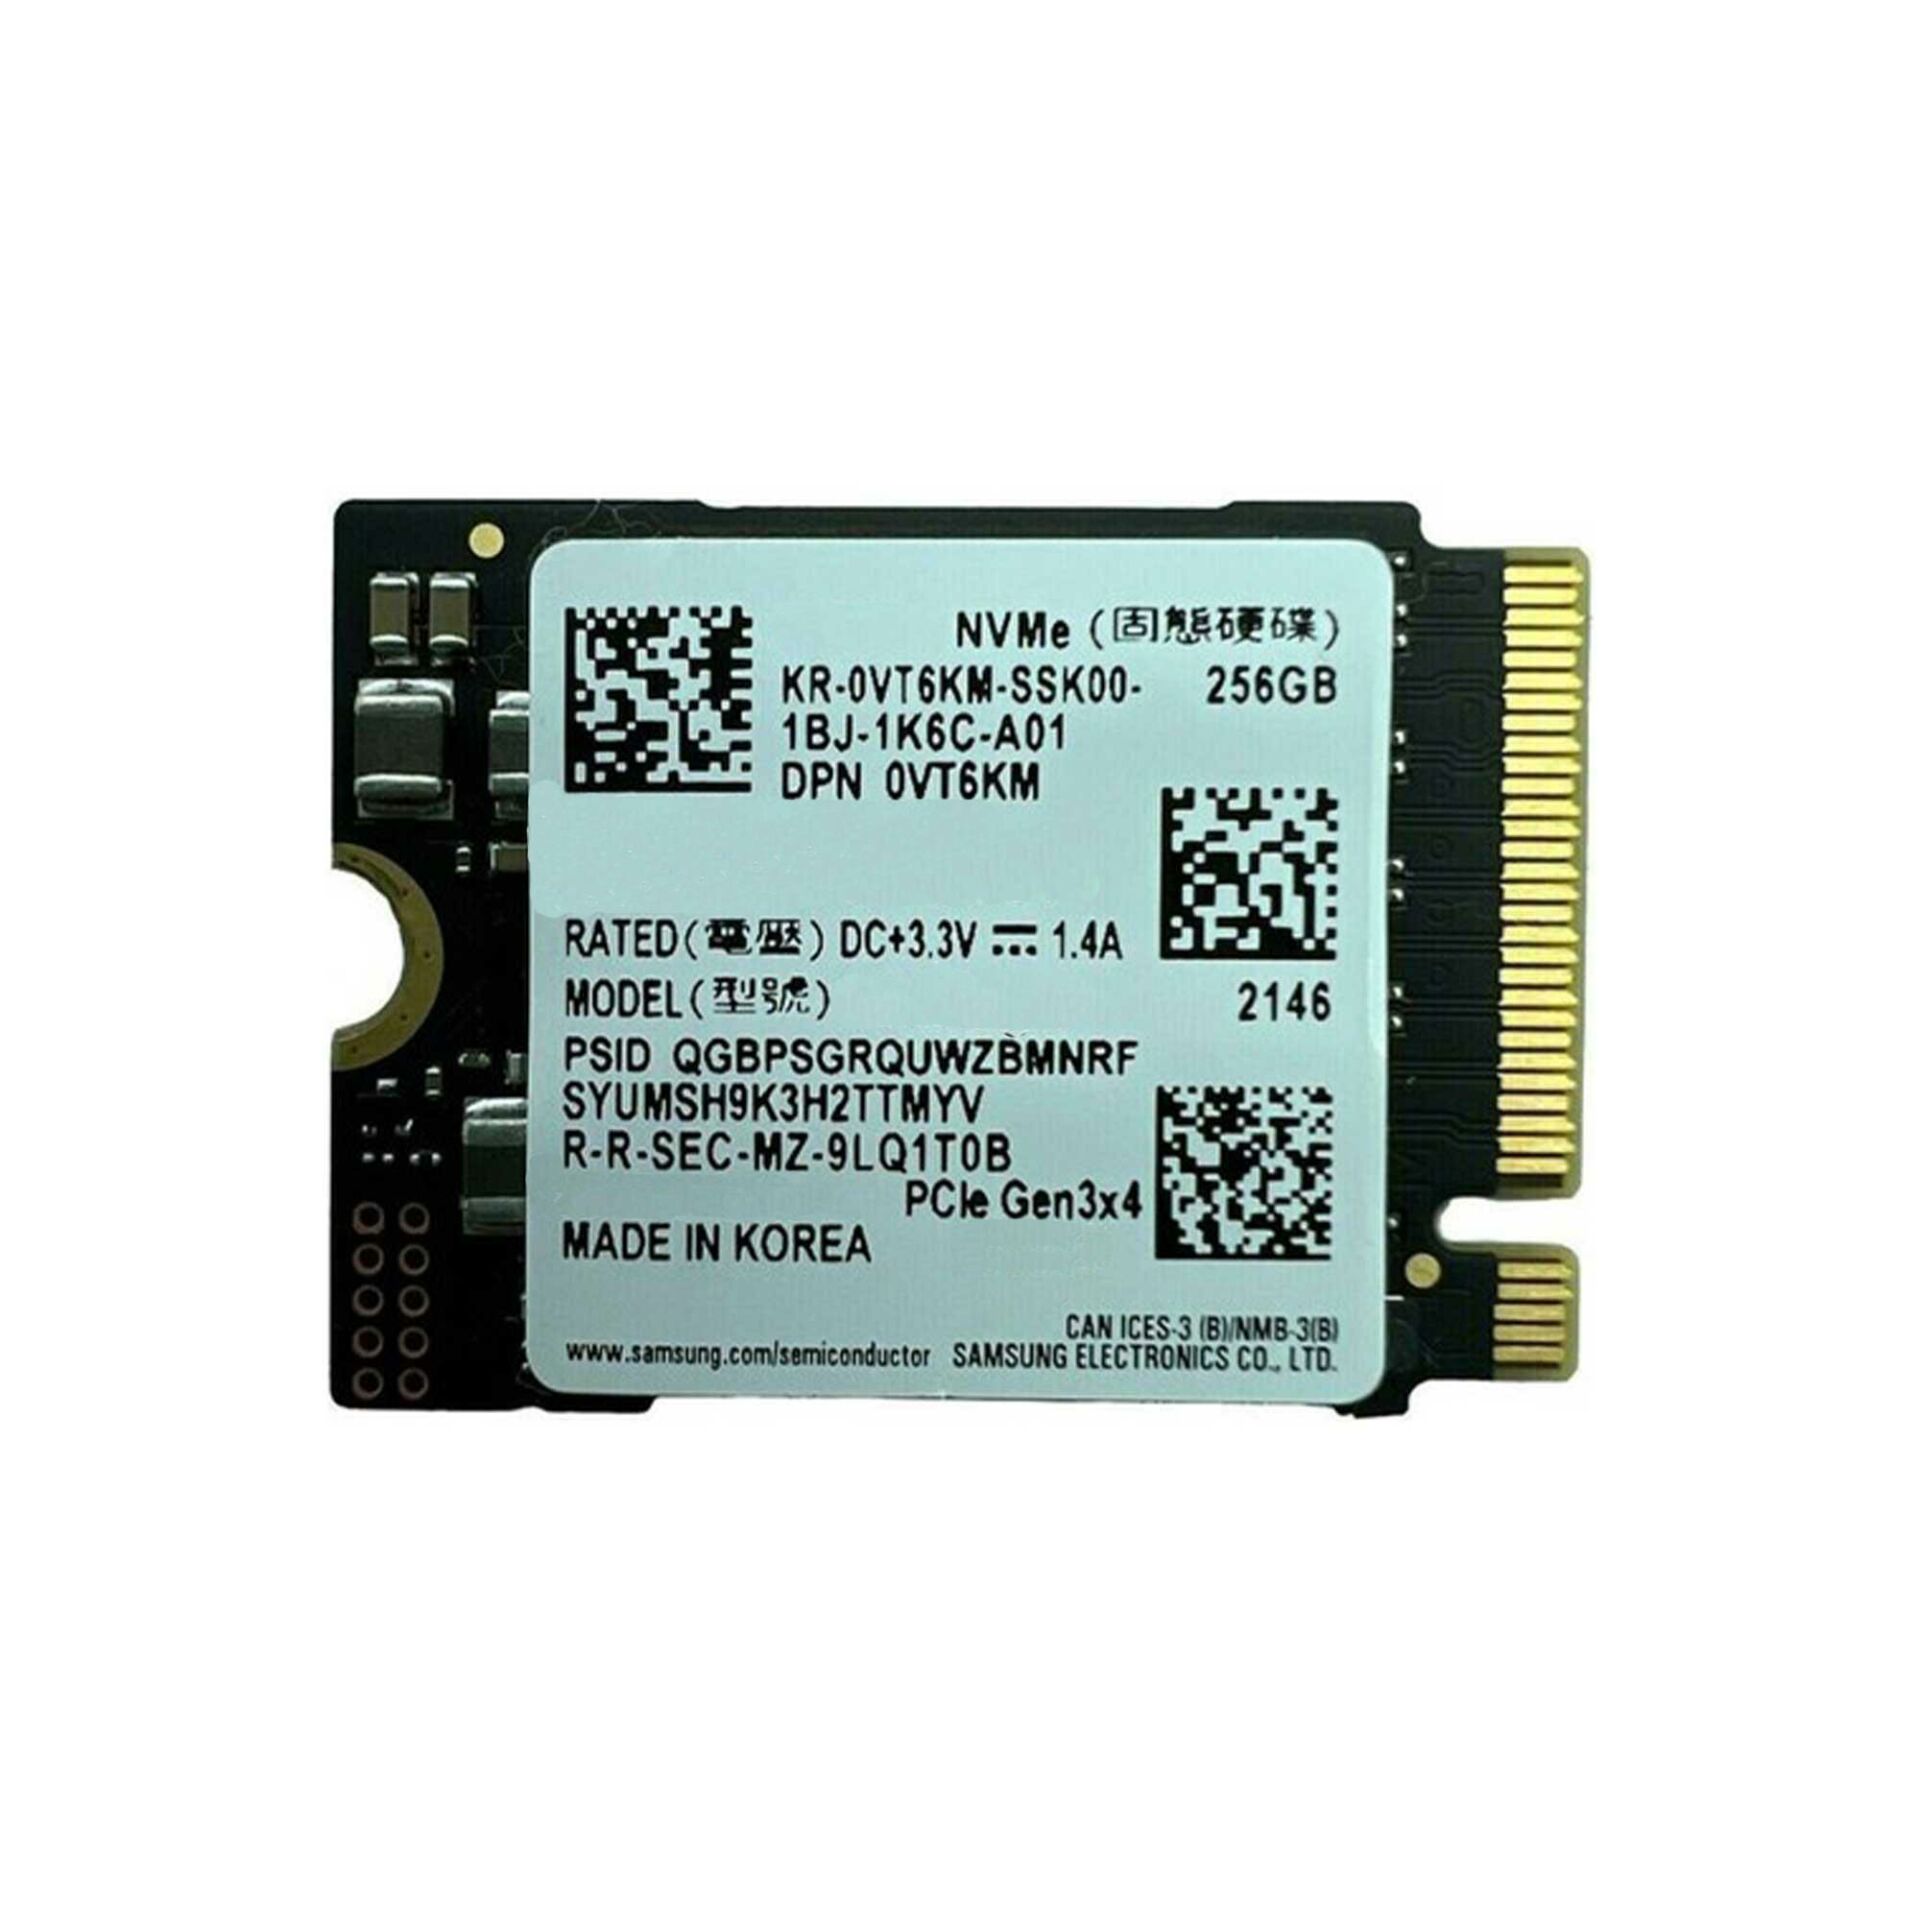 Samsung PM9B1 256GB M.2 NVME 22x30 SSD